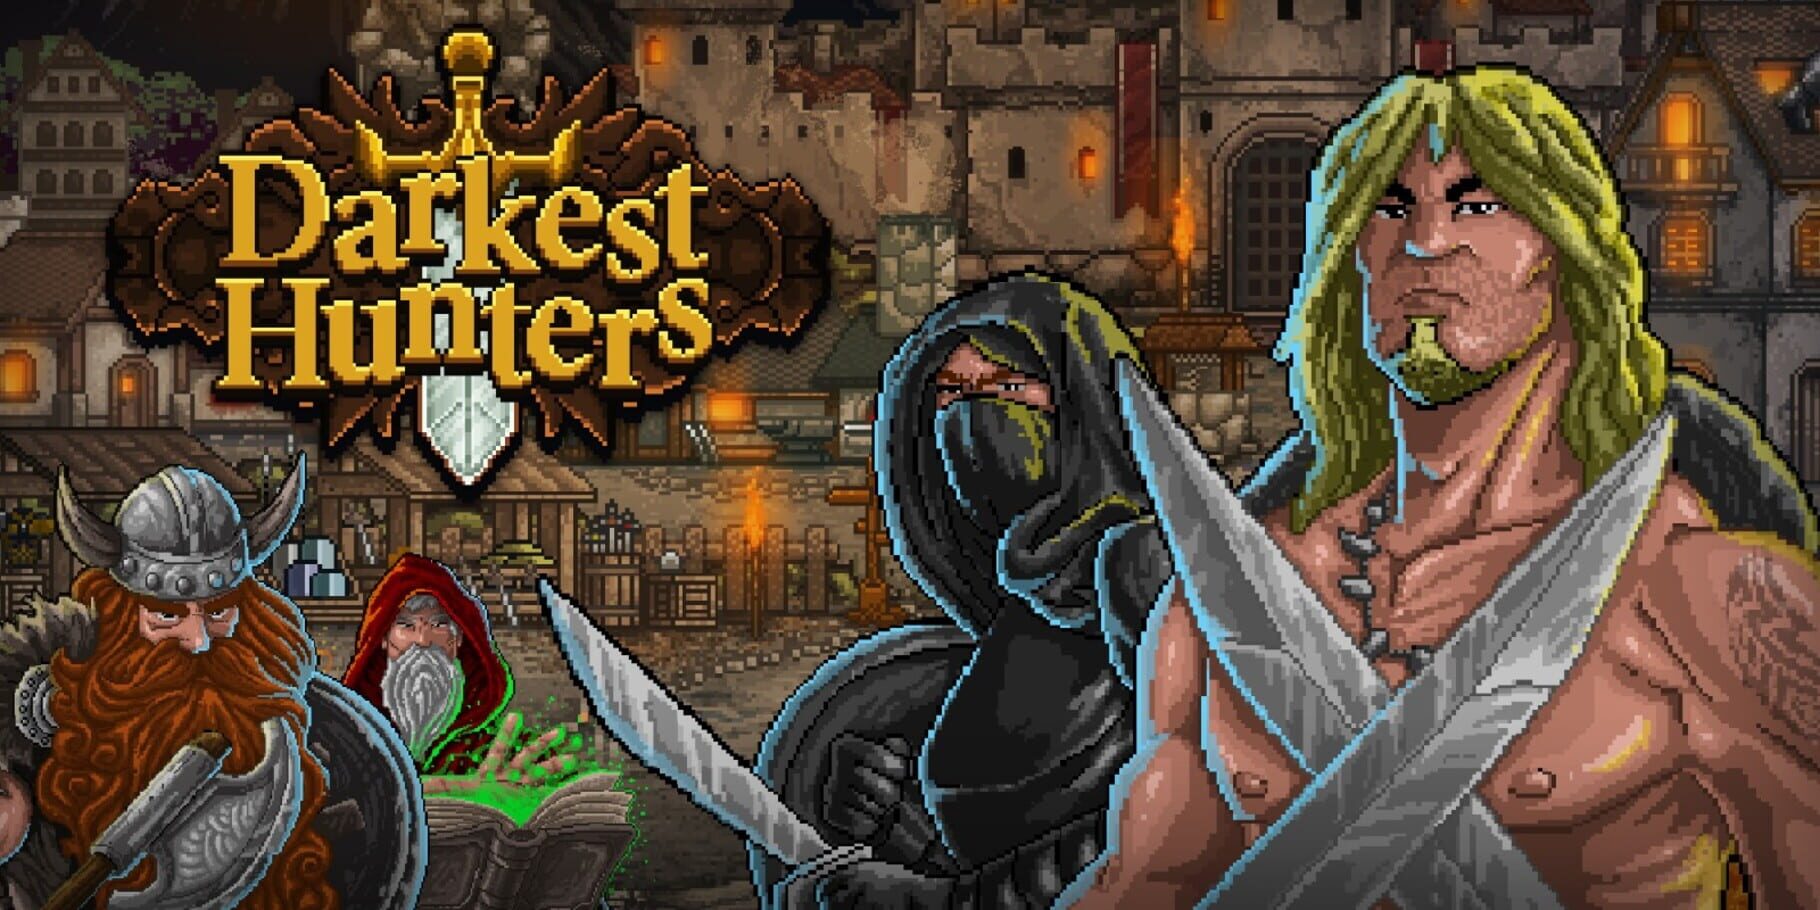 Darkest Hunters artwork